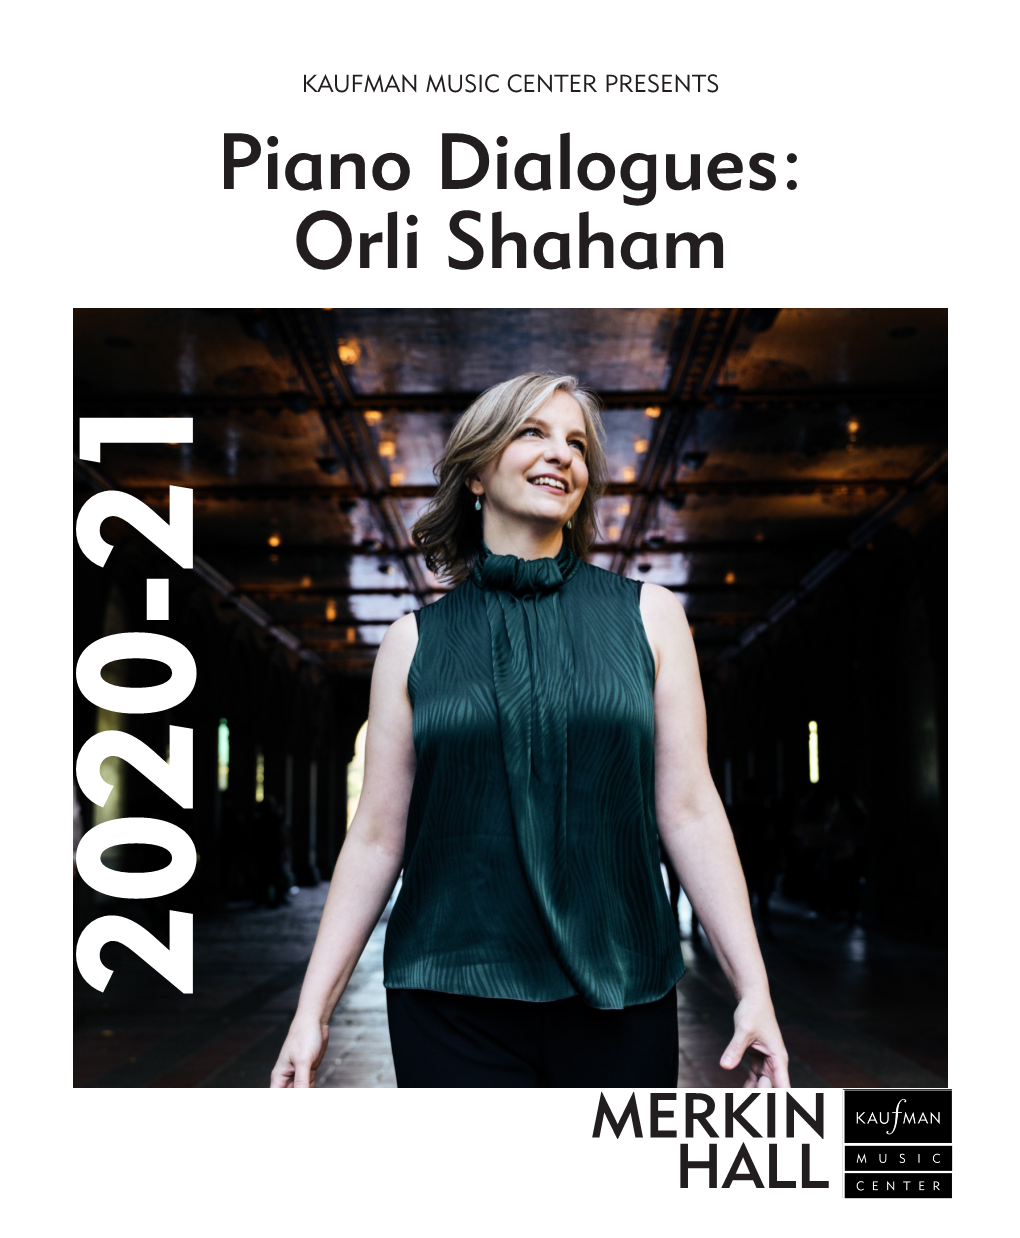 Piano Dialogues: Orli Shaham 2020-21